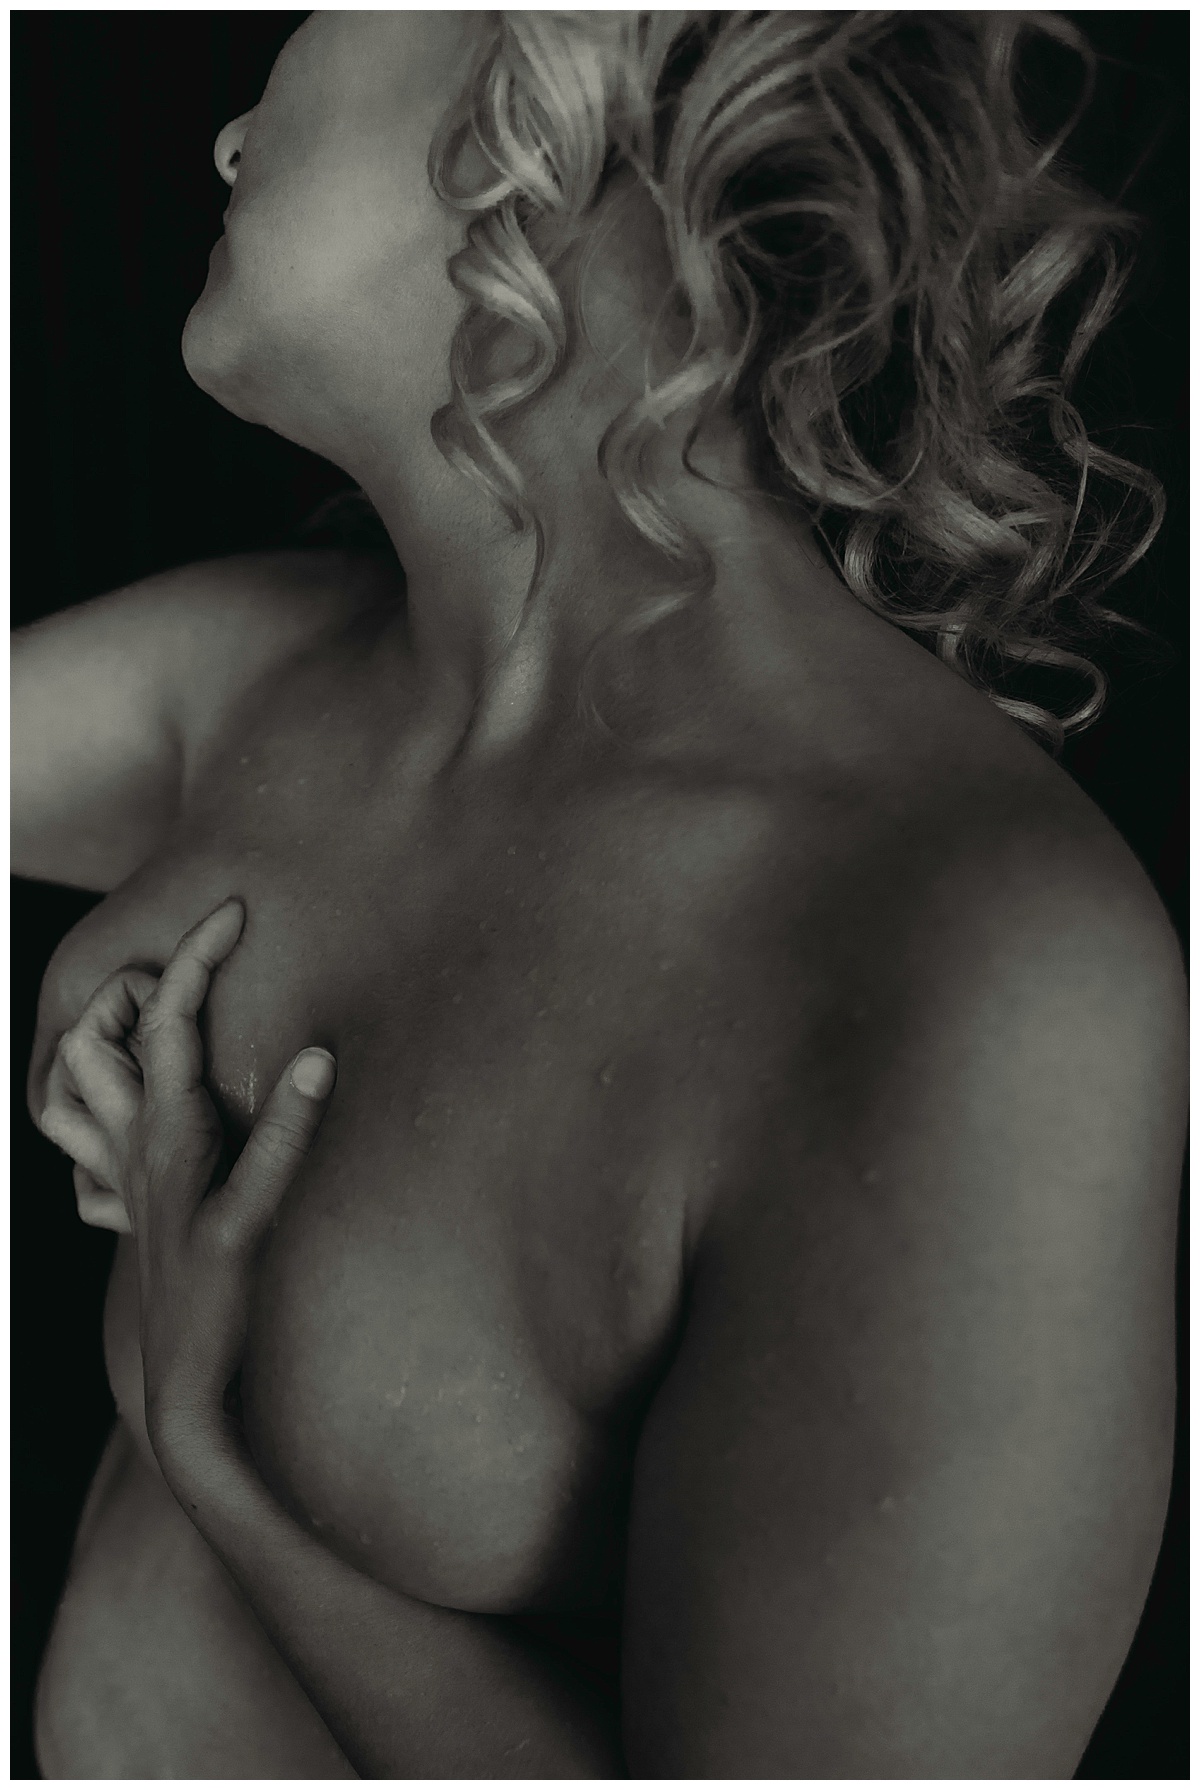 Curls on blonde woman by Boudoir Photography Minnesota